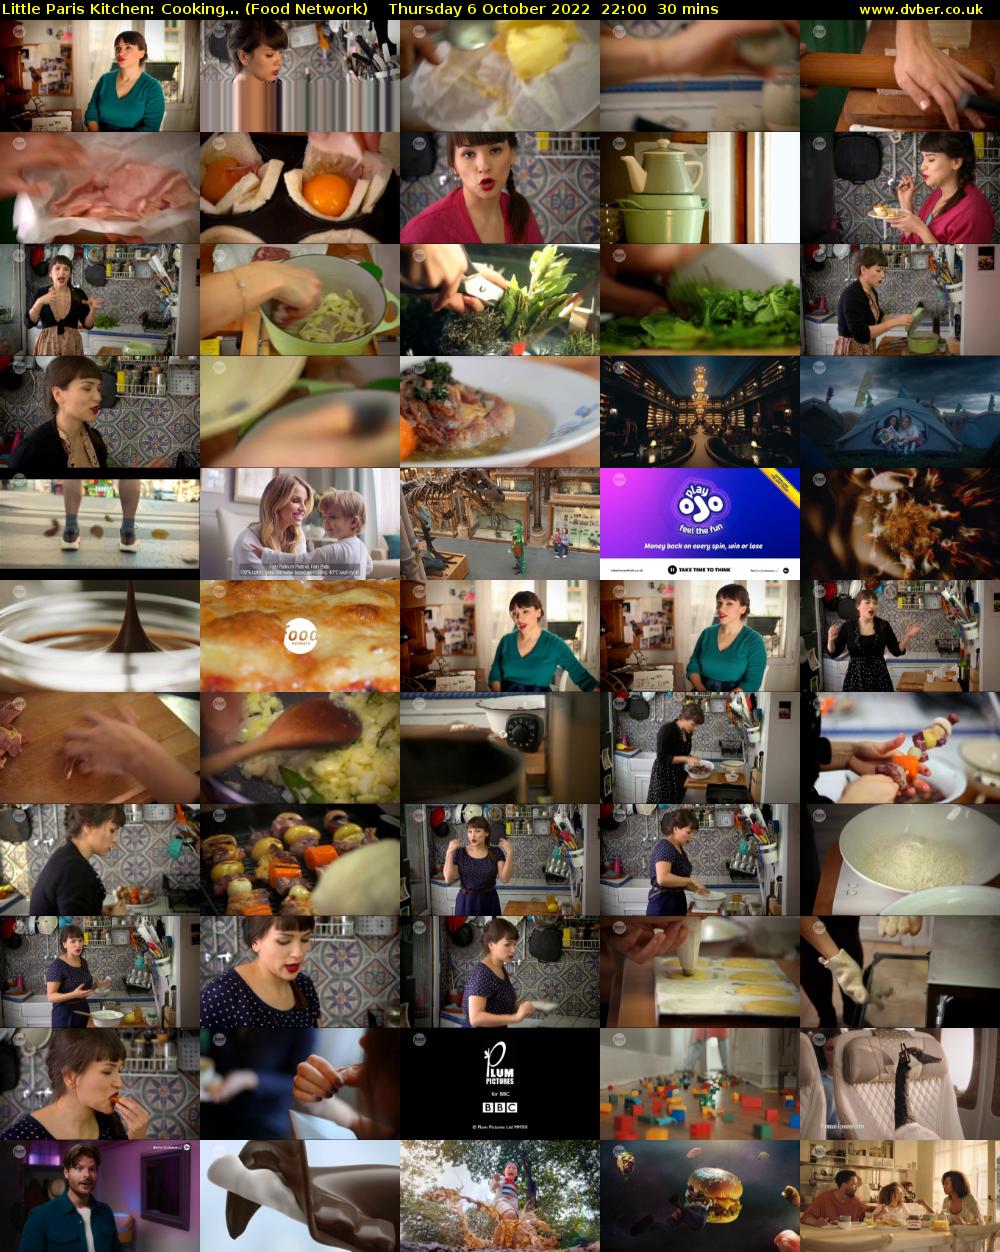 Little Paris Kitchen: Cooking... (Food Network) Thursday 6 October 2022 22:00 - 22:30